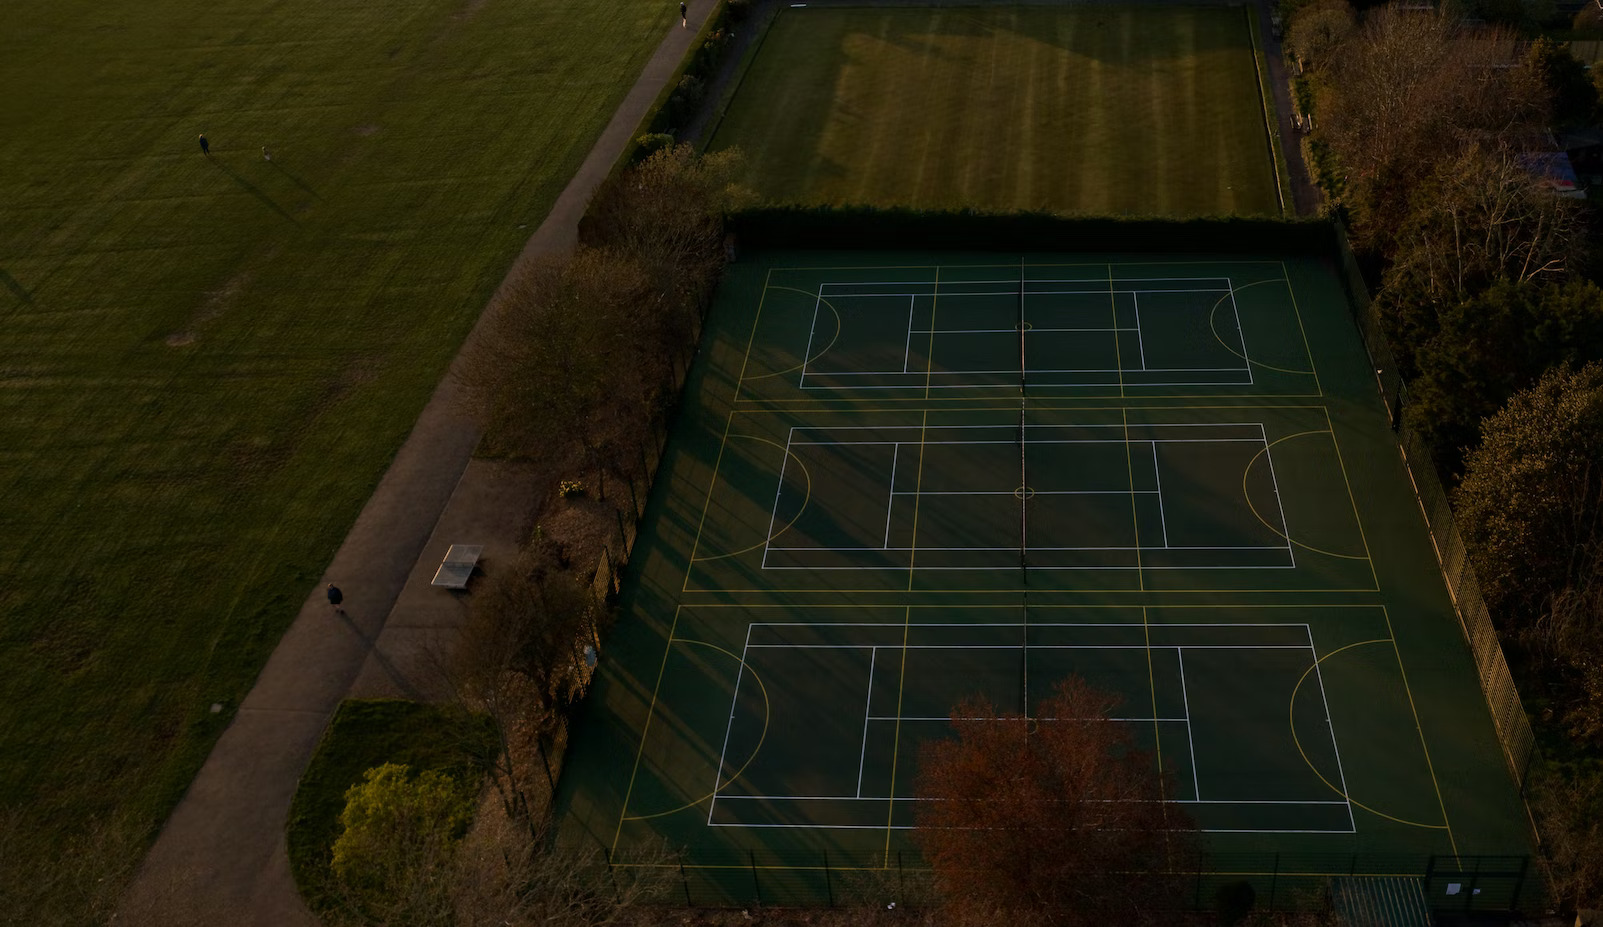 3 empty tennis courts